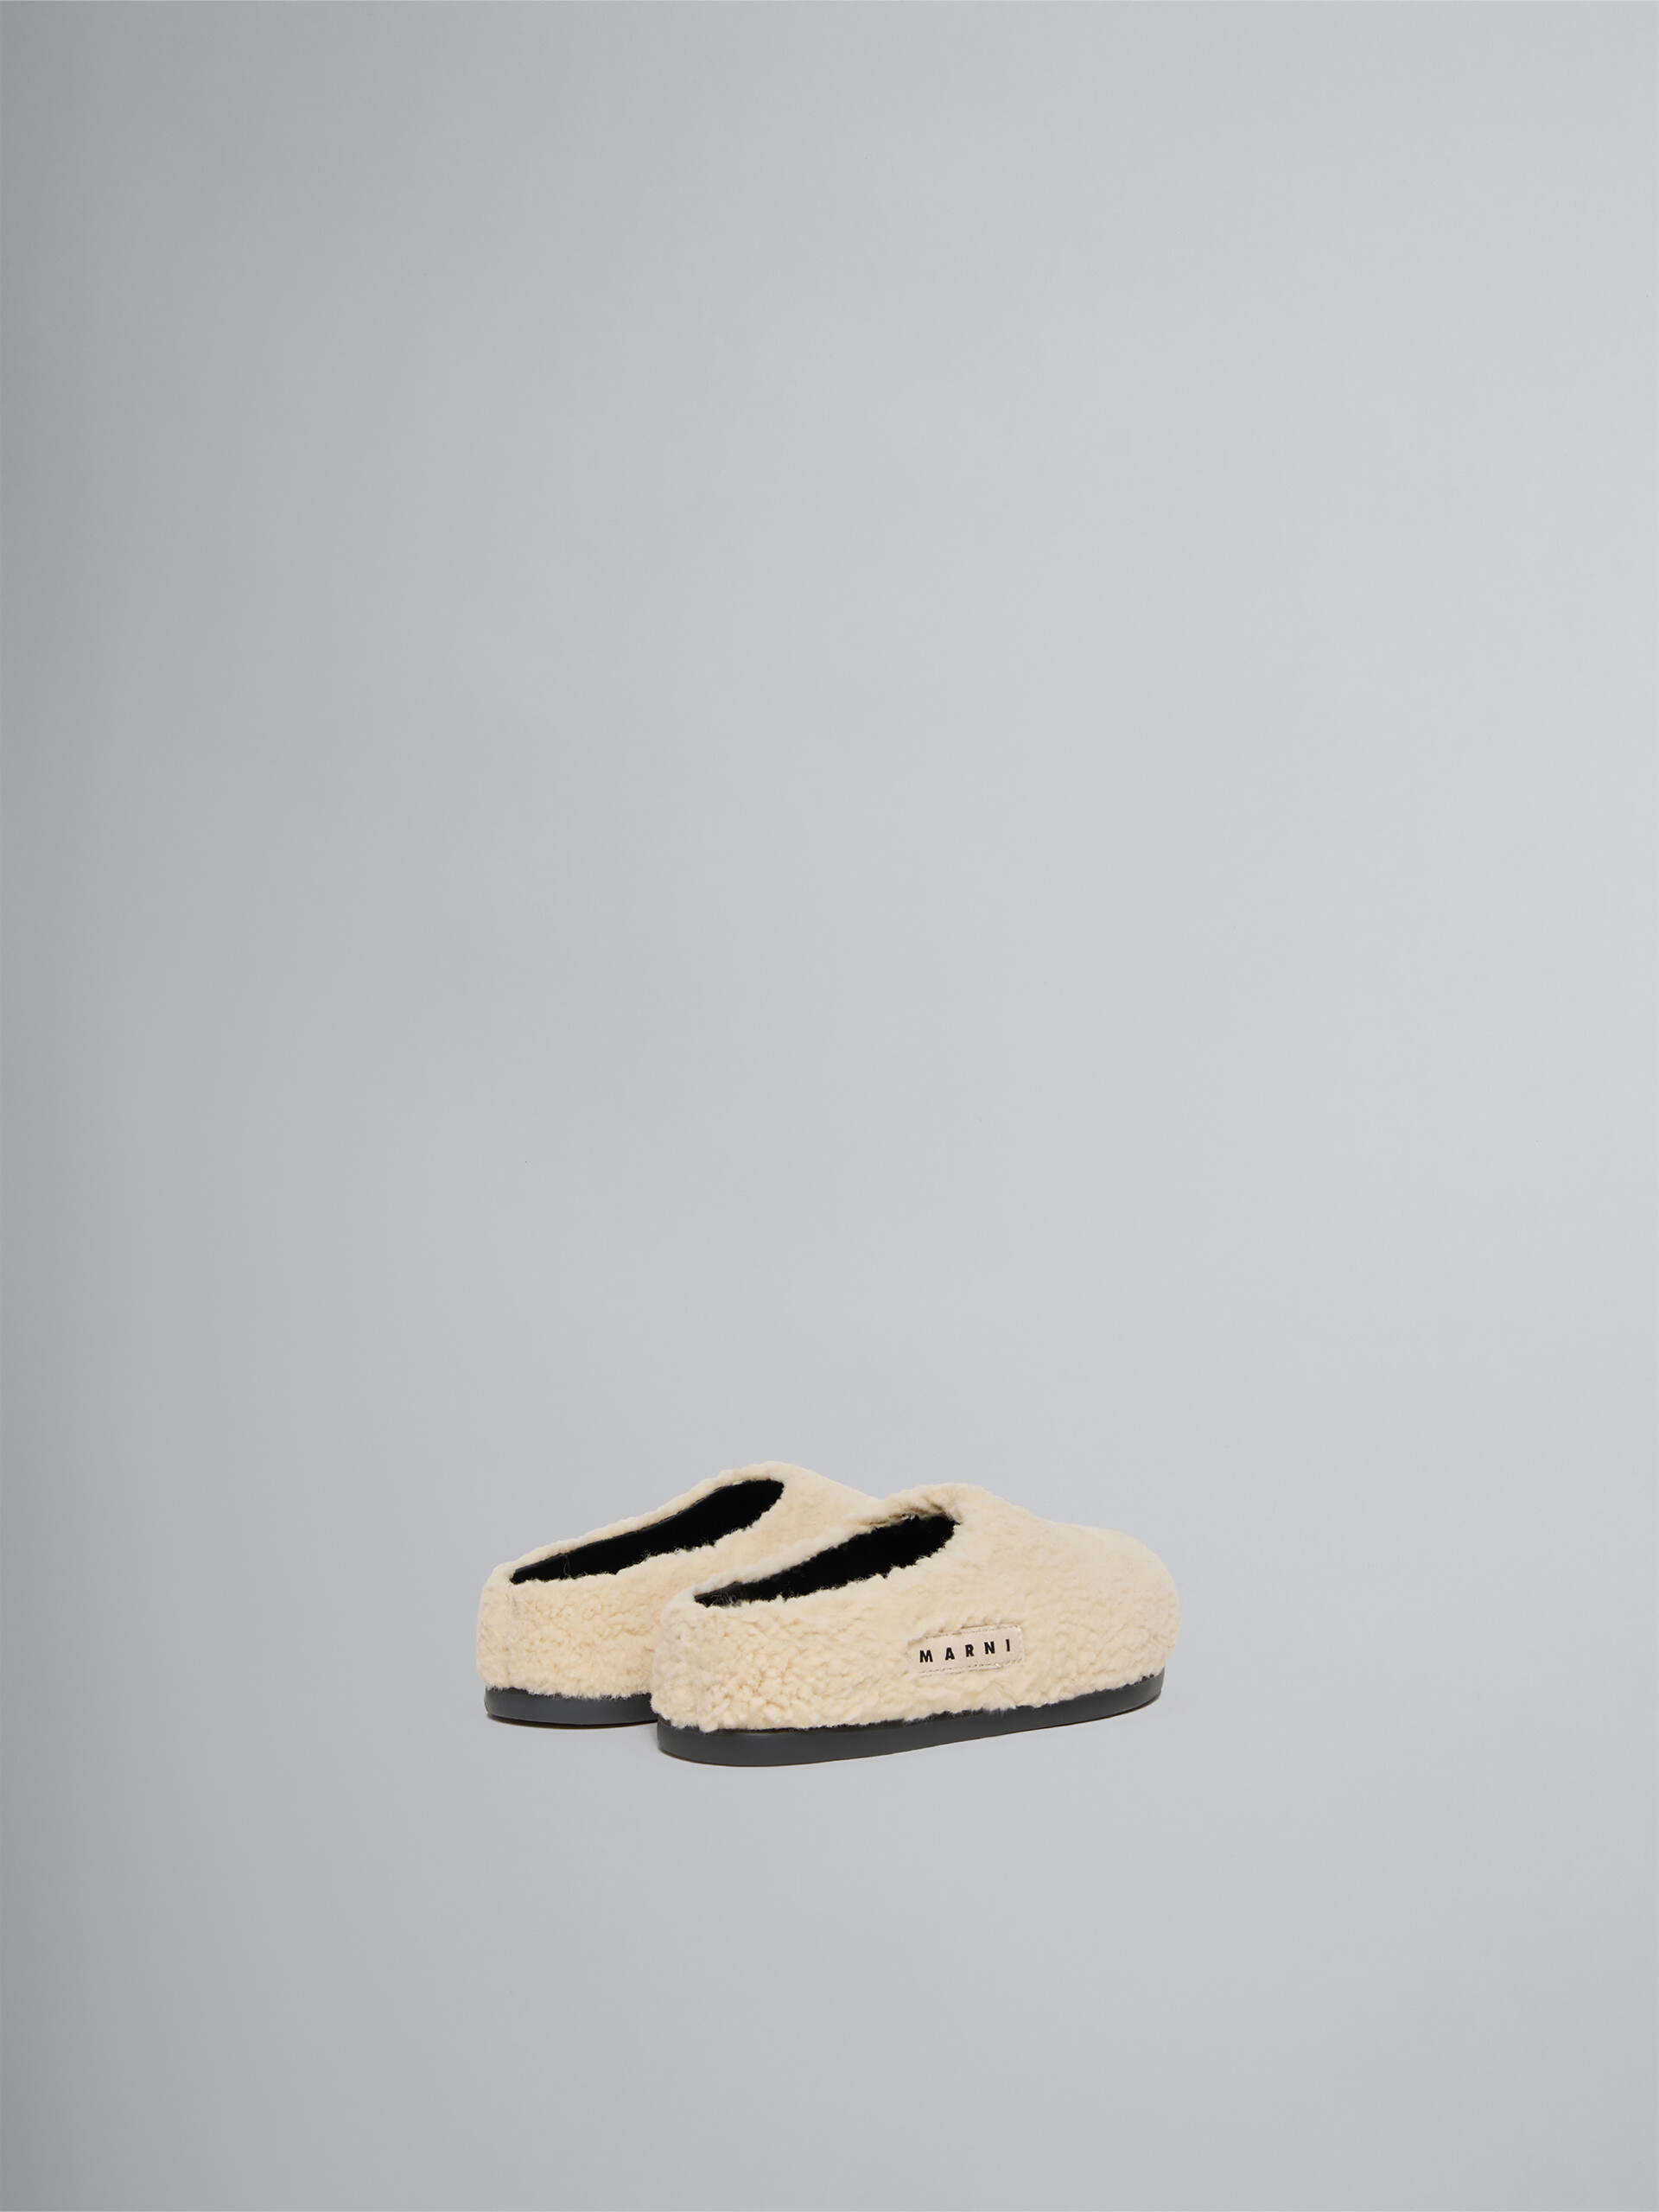 Cream faux shearling fussbett sabot - Sandals - Image 3